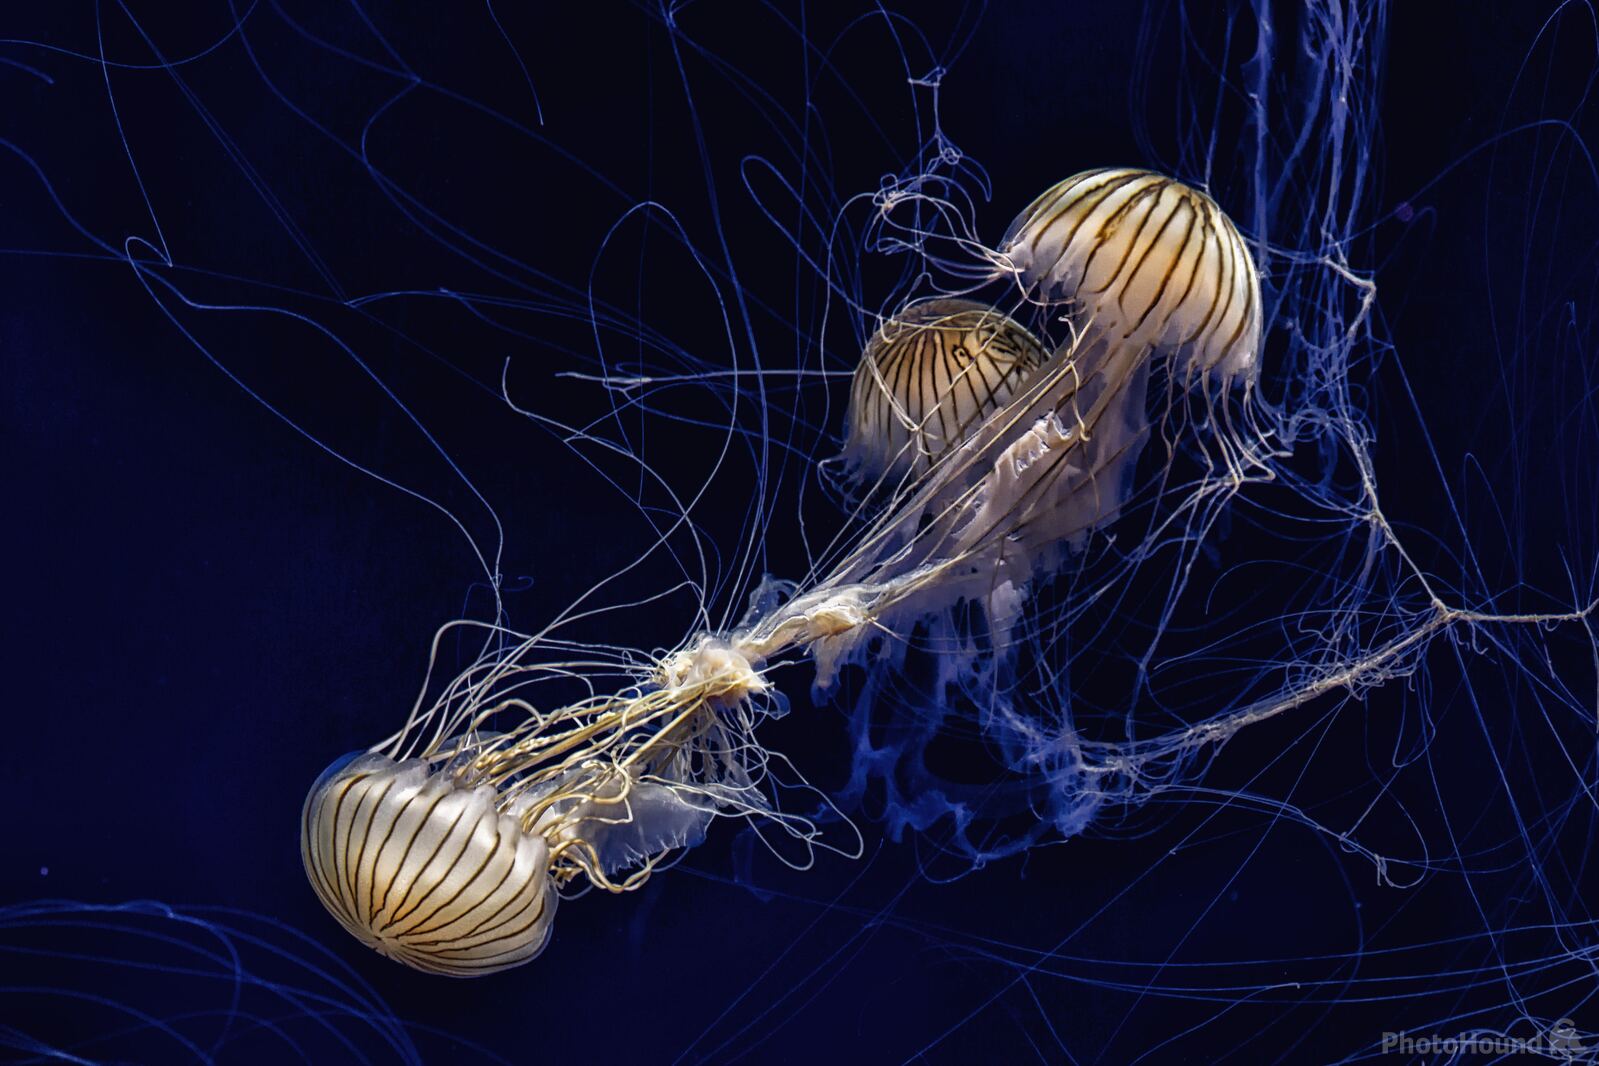 Image of Georgia Aquarium by Team PhotoHound